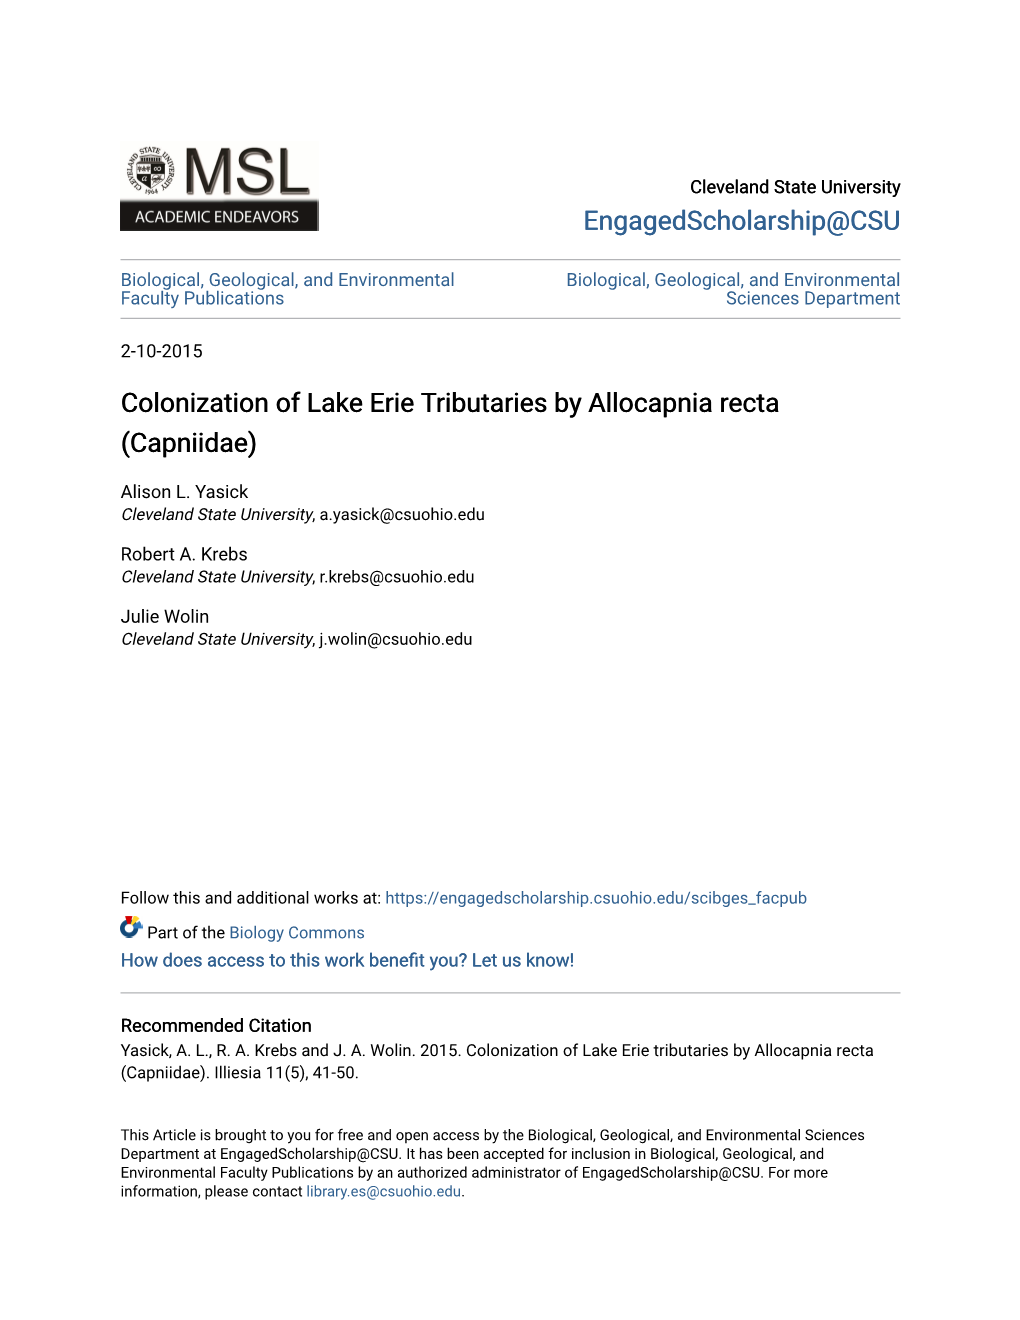 Colonization of Lake Erie Tributaries by Allocapnia Recta (Capniidae)